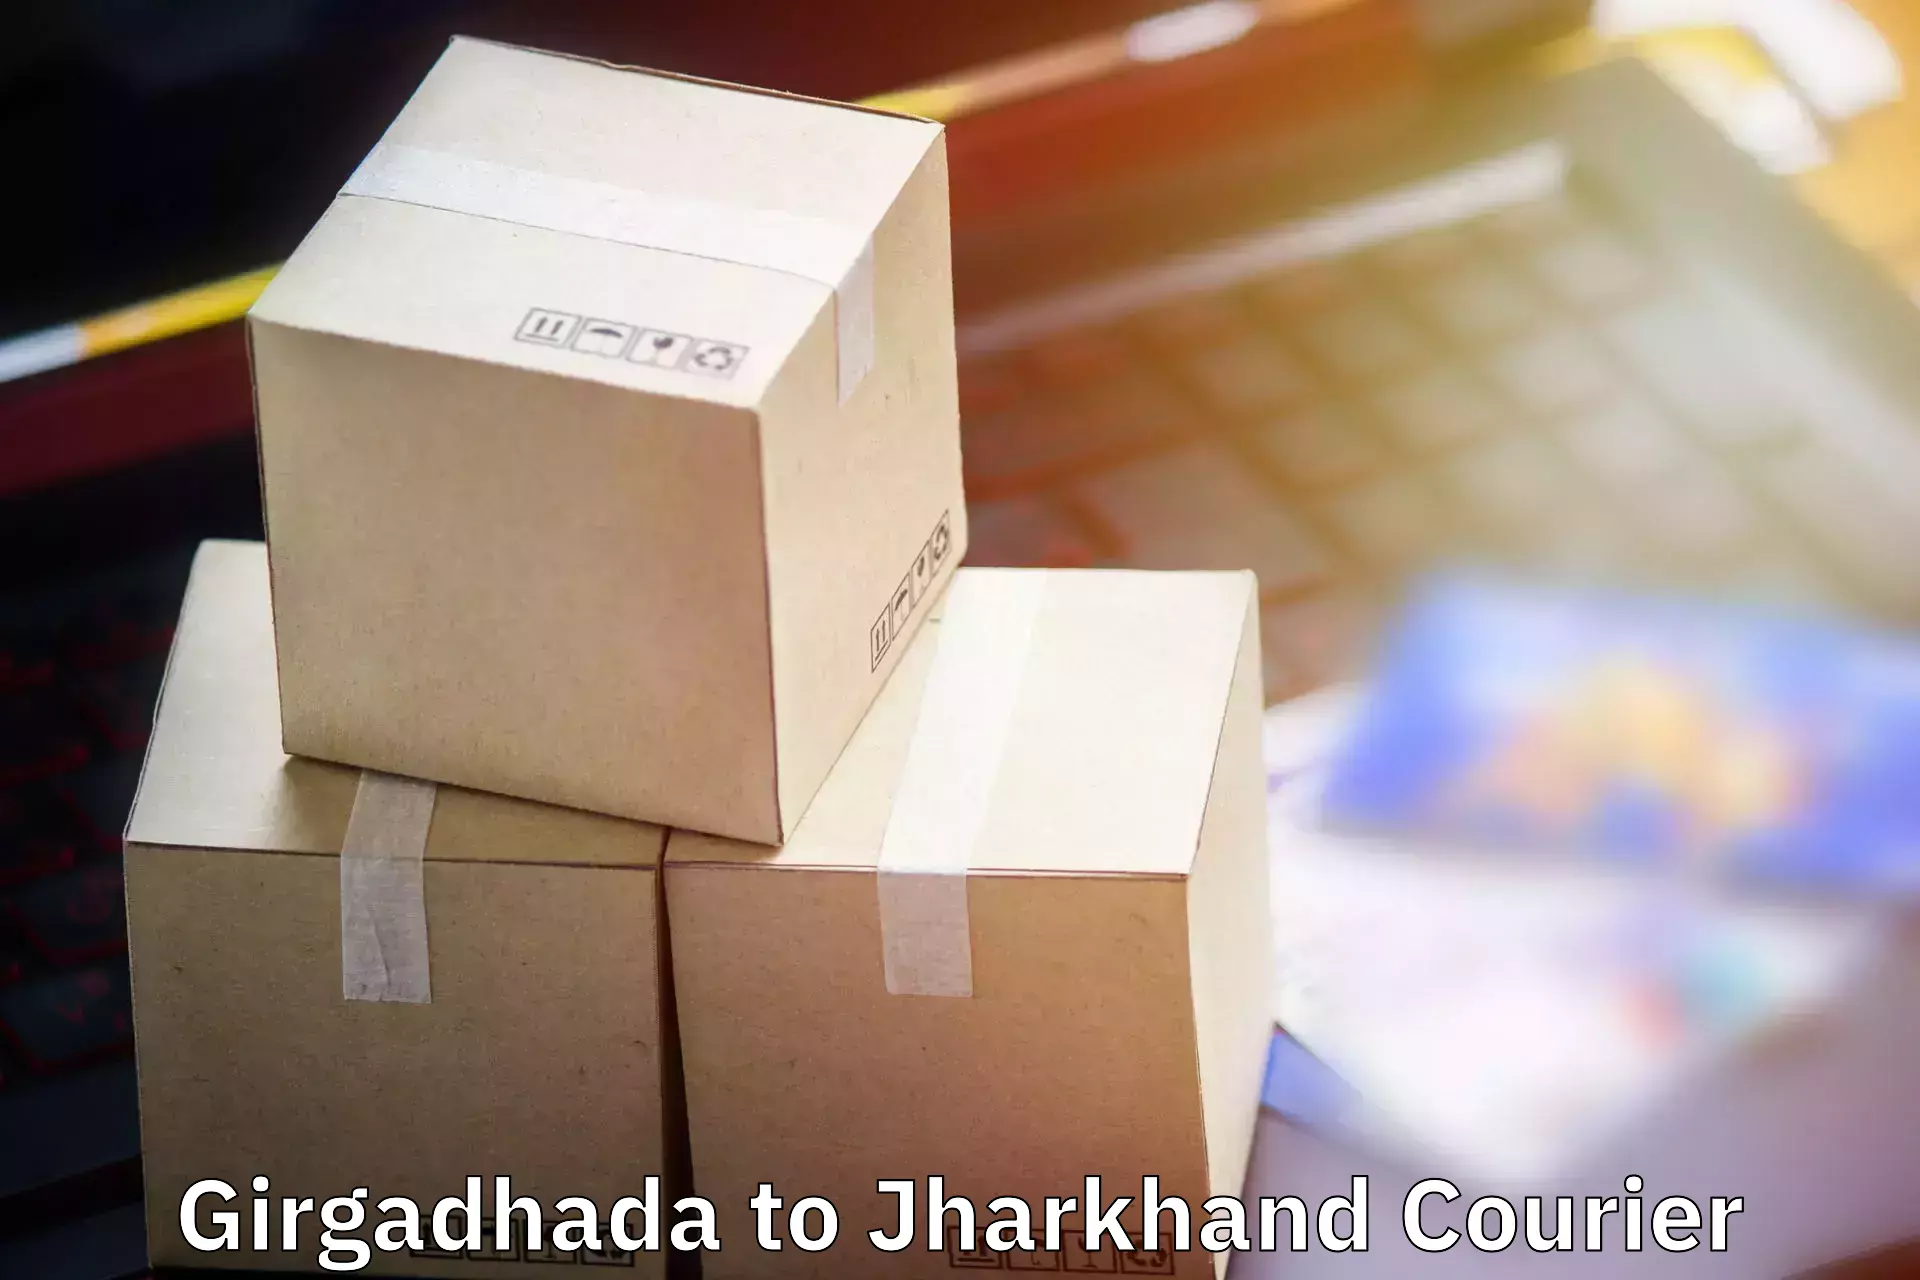 Premium luggage delivery Girgadhada to Ranchi